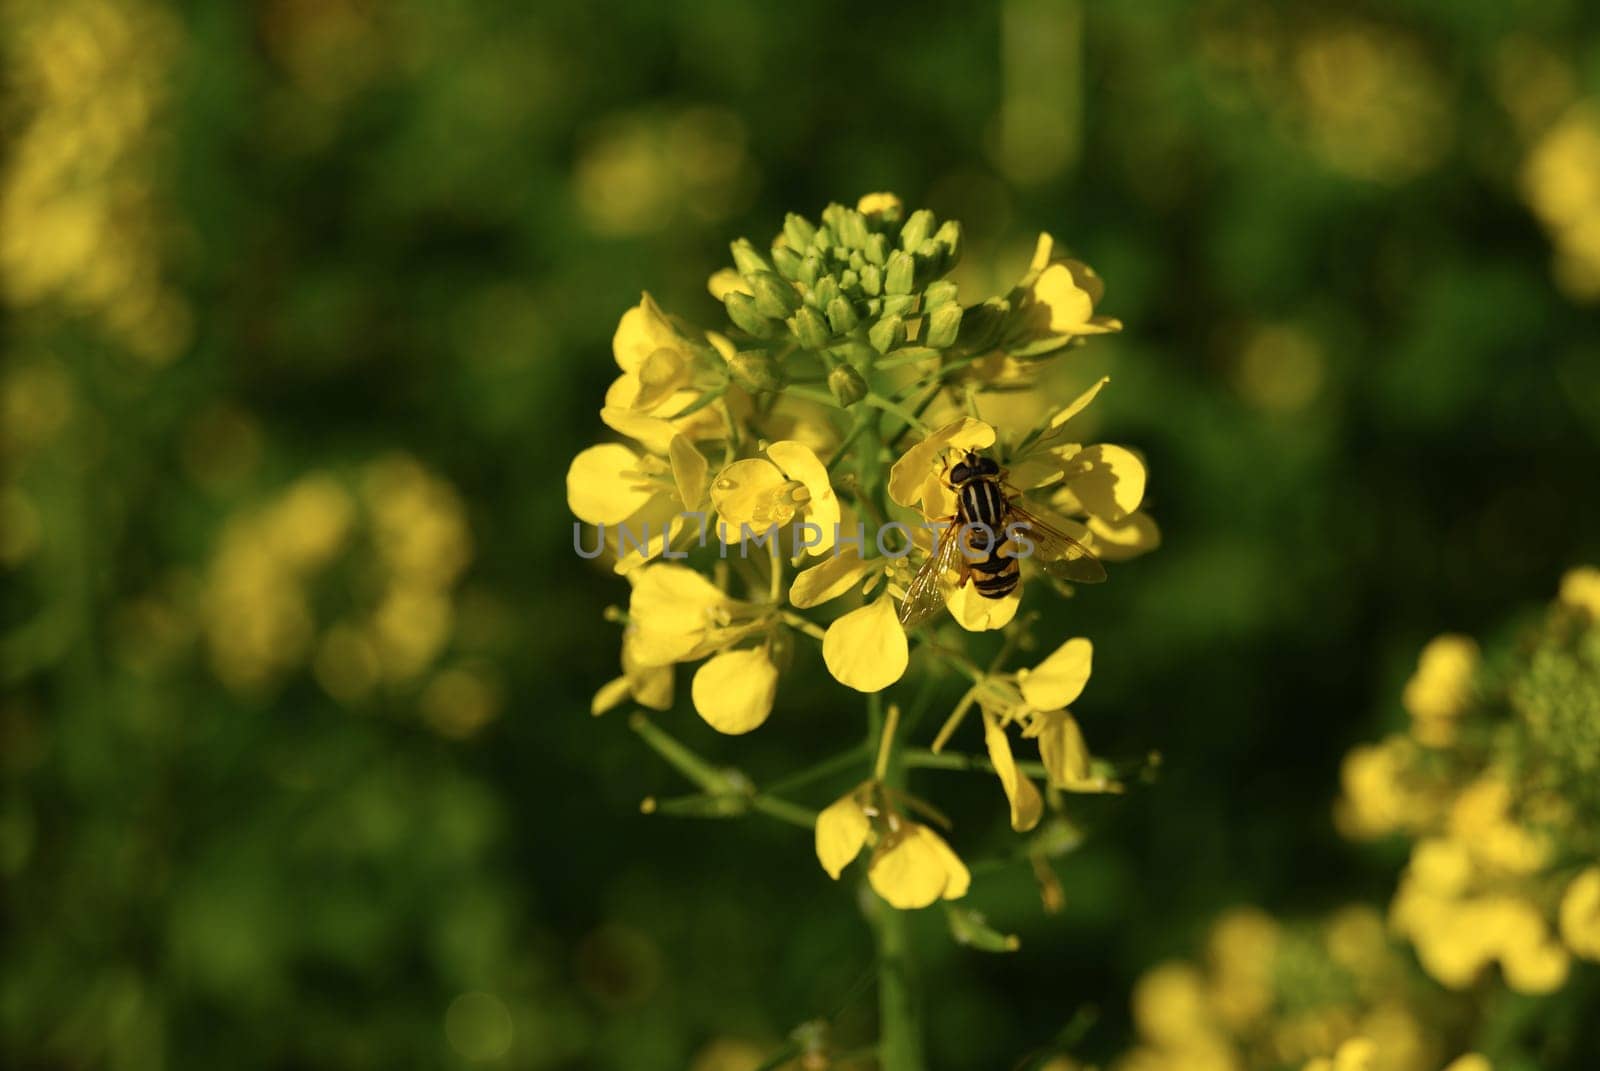 bee on a yellow flower in a summer garden by Севостьянов